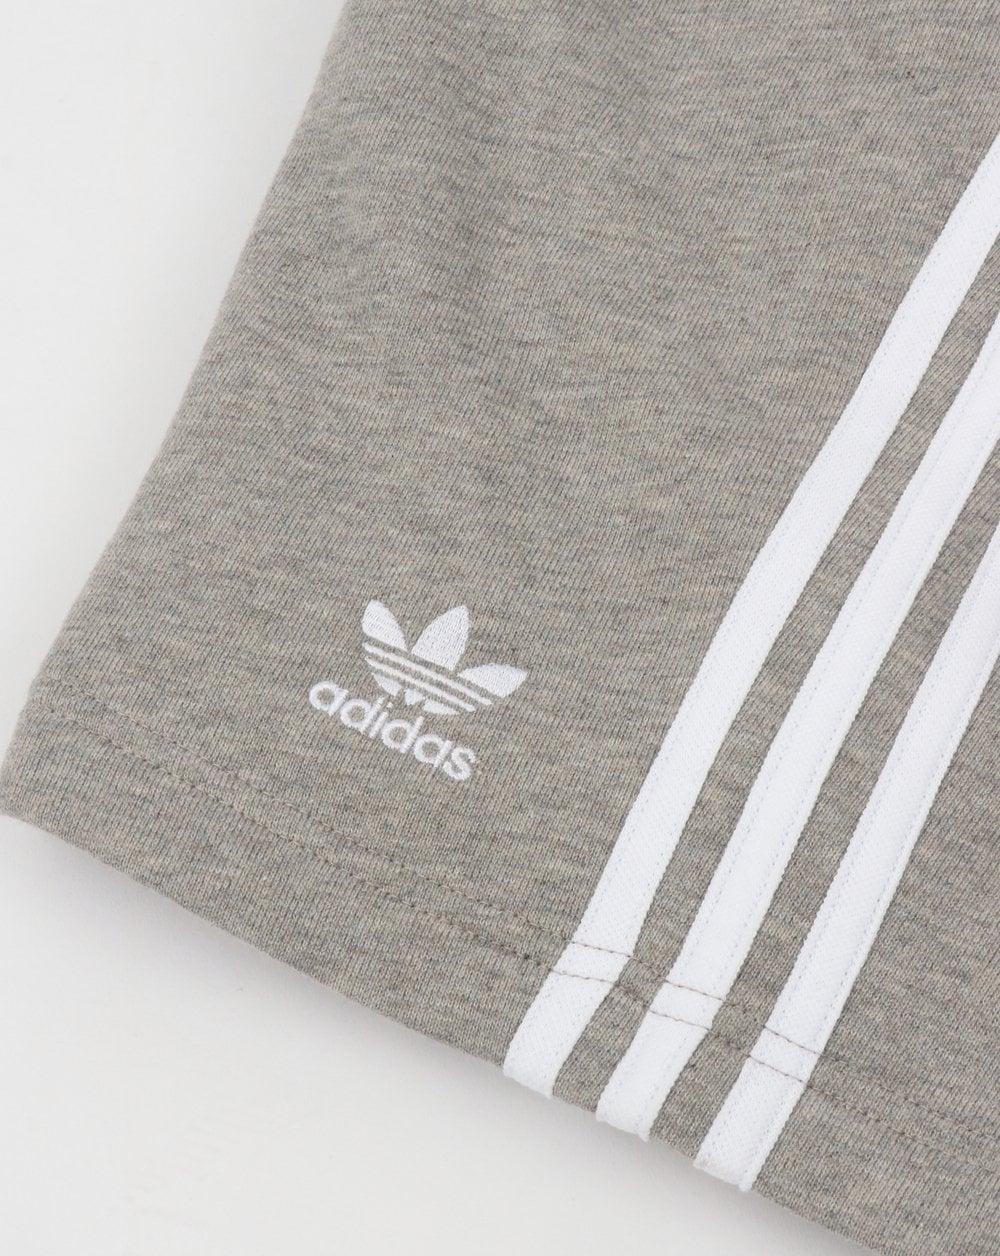 Adidas Grey Logo - Adidas Originals 3 Stripes Shorts Grey Heather,cotton,terry,toweling ...